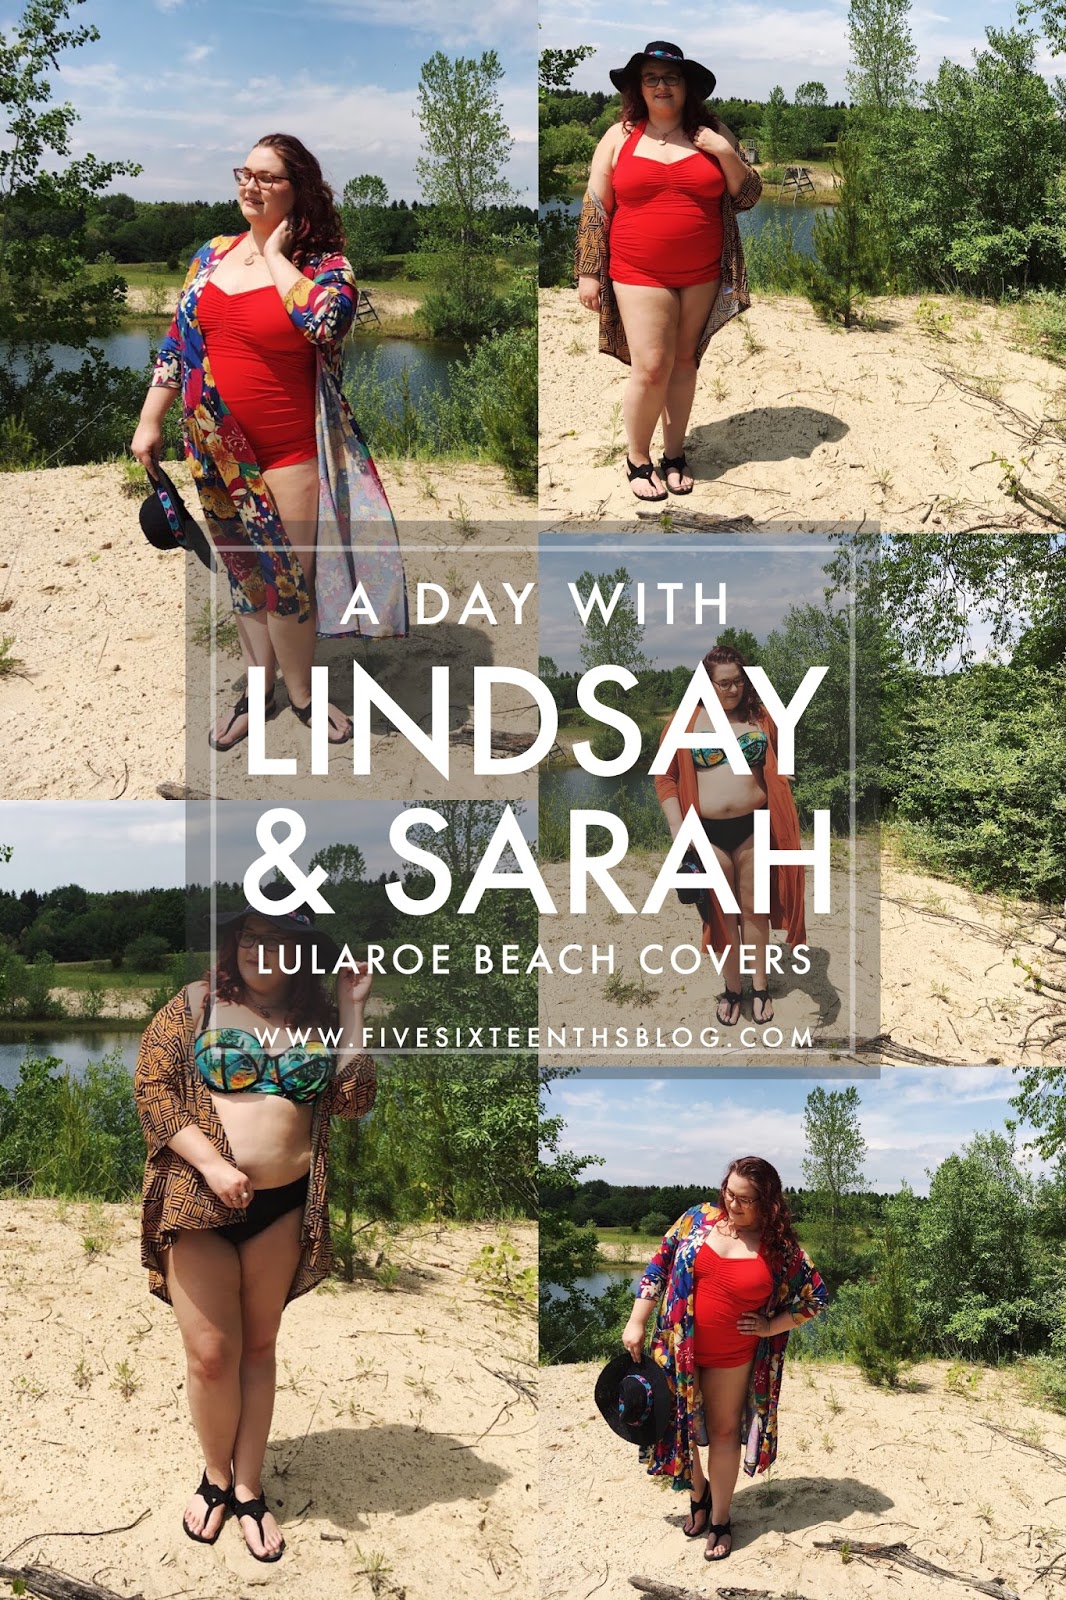 LuLaroe Beach Cover